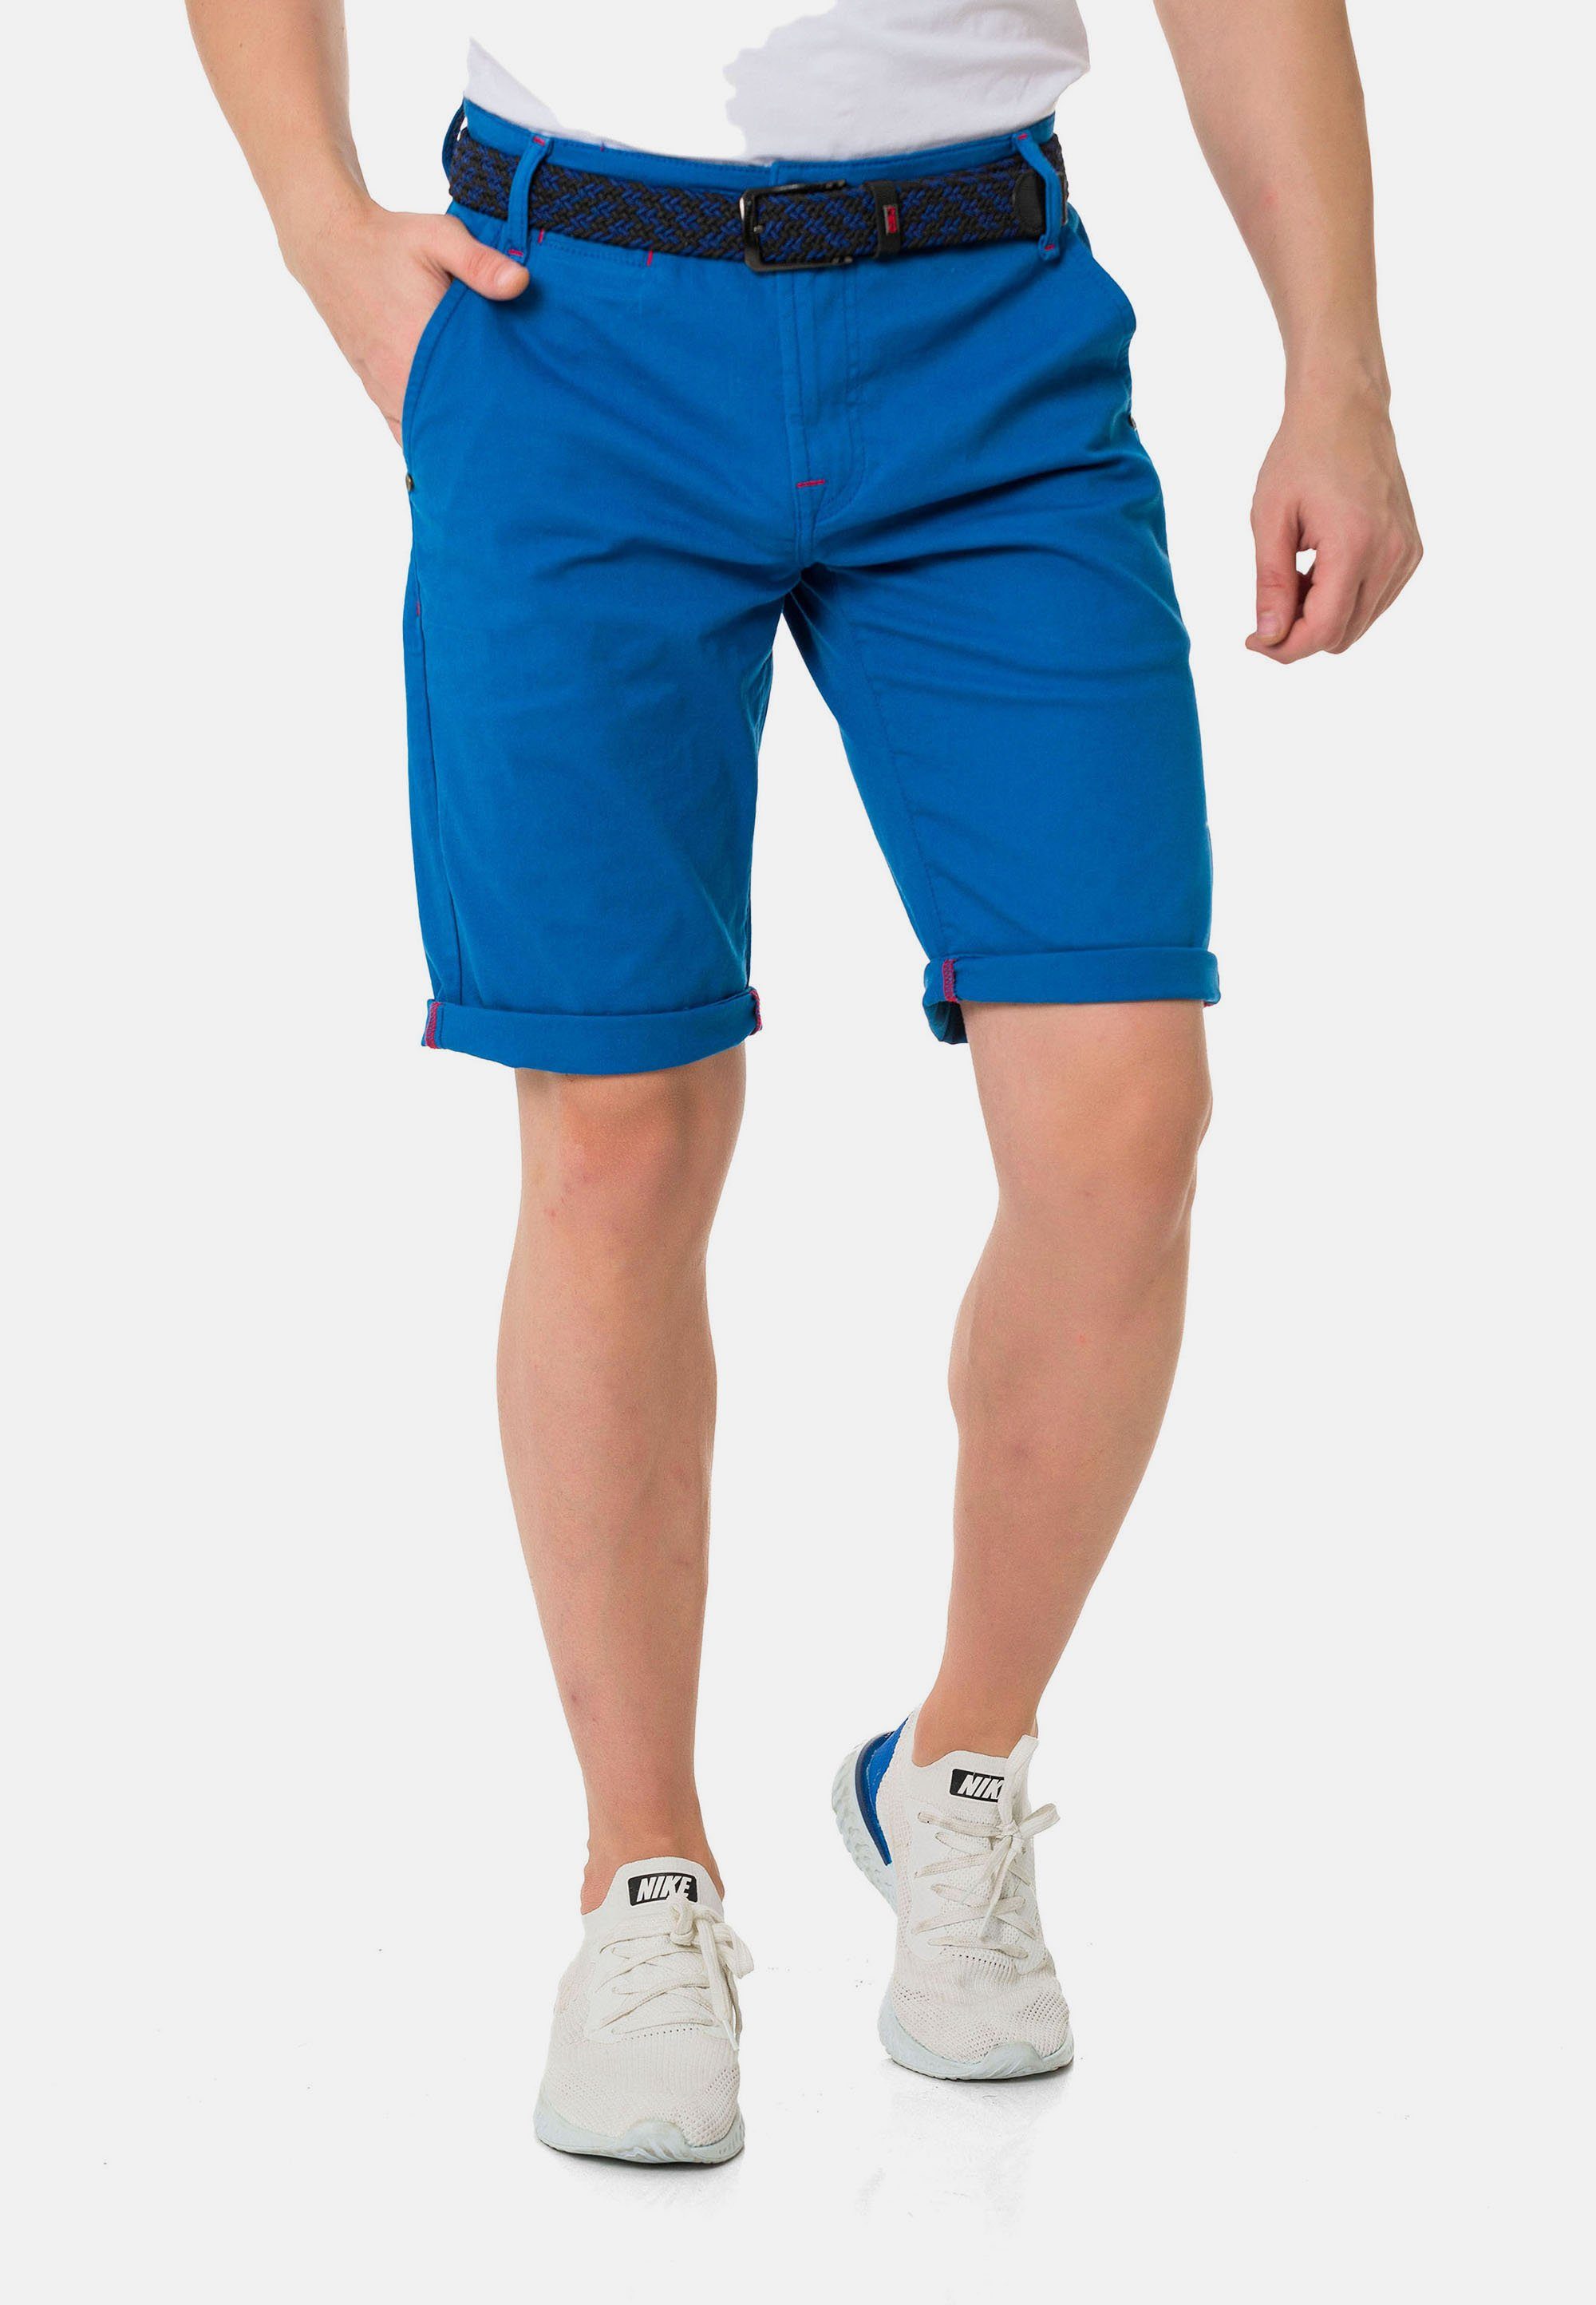 Cipo & Baxx Shorts im einfarbigen Look blau